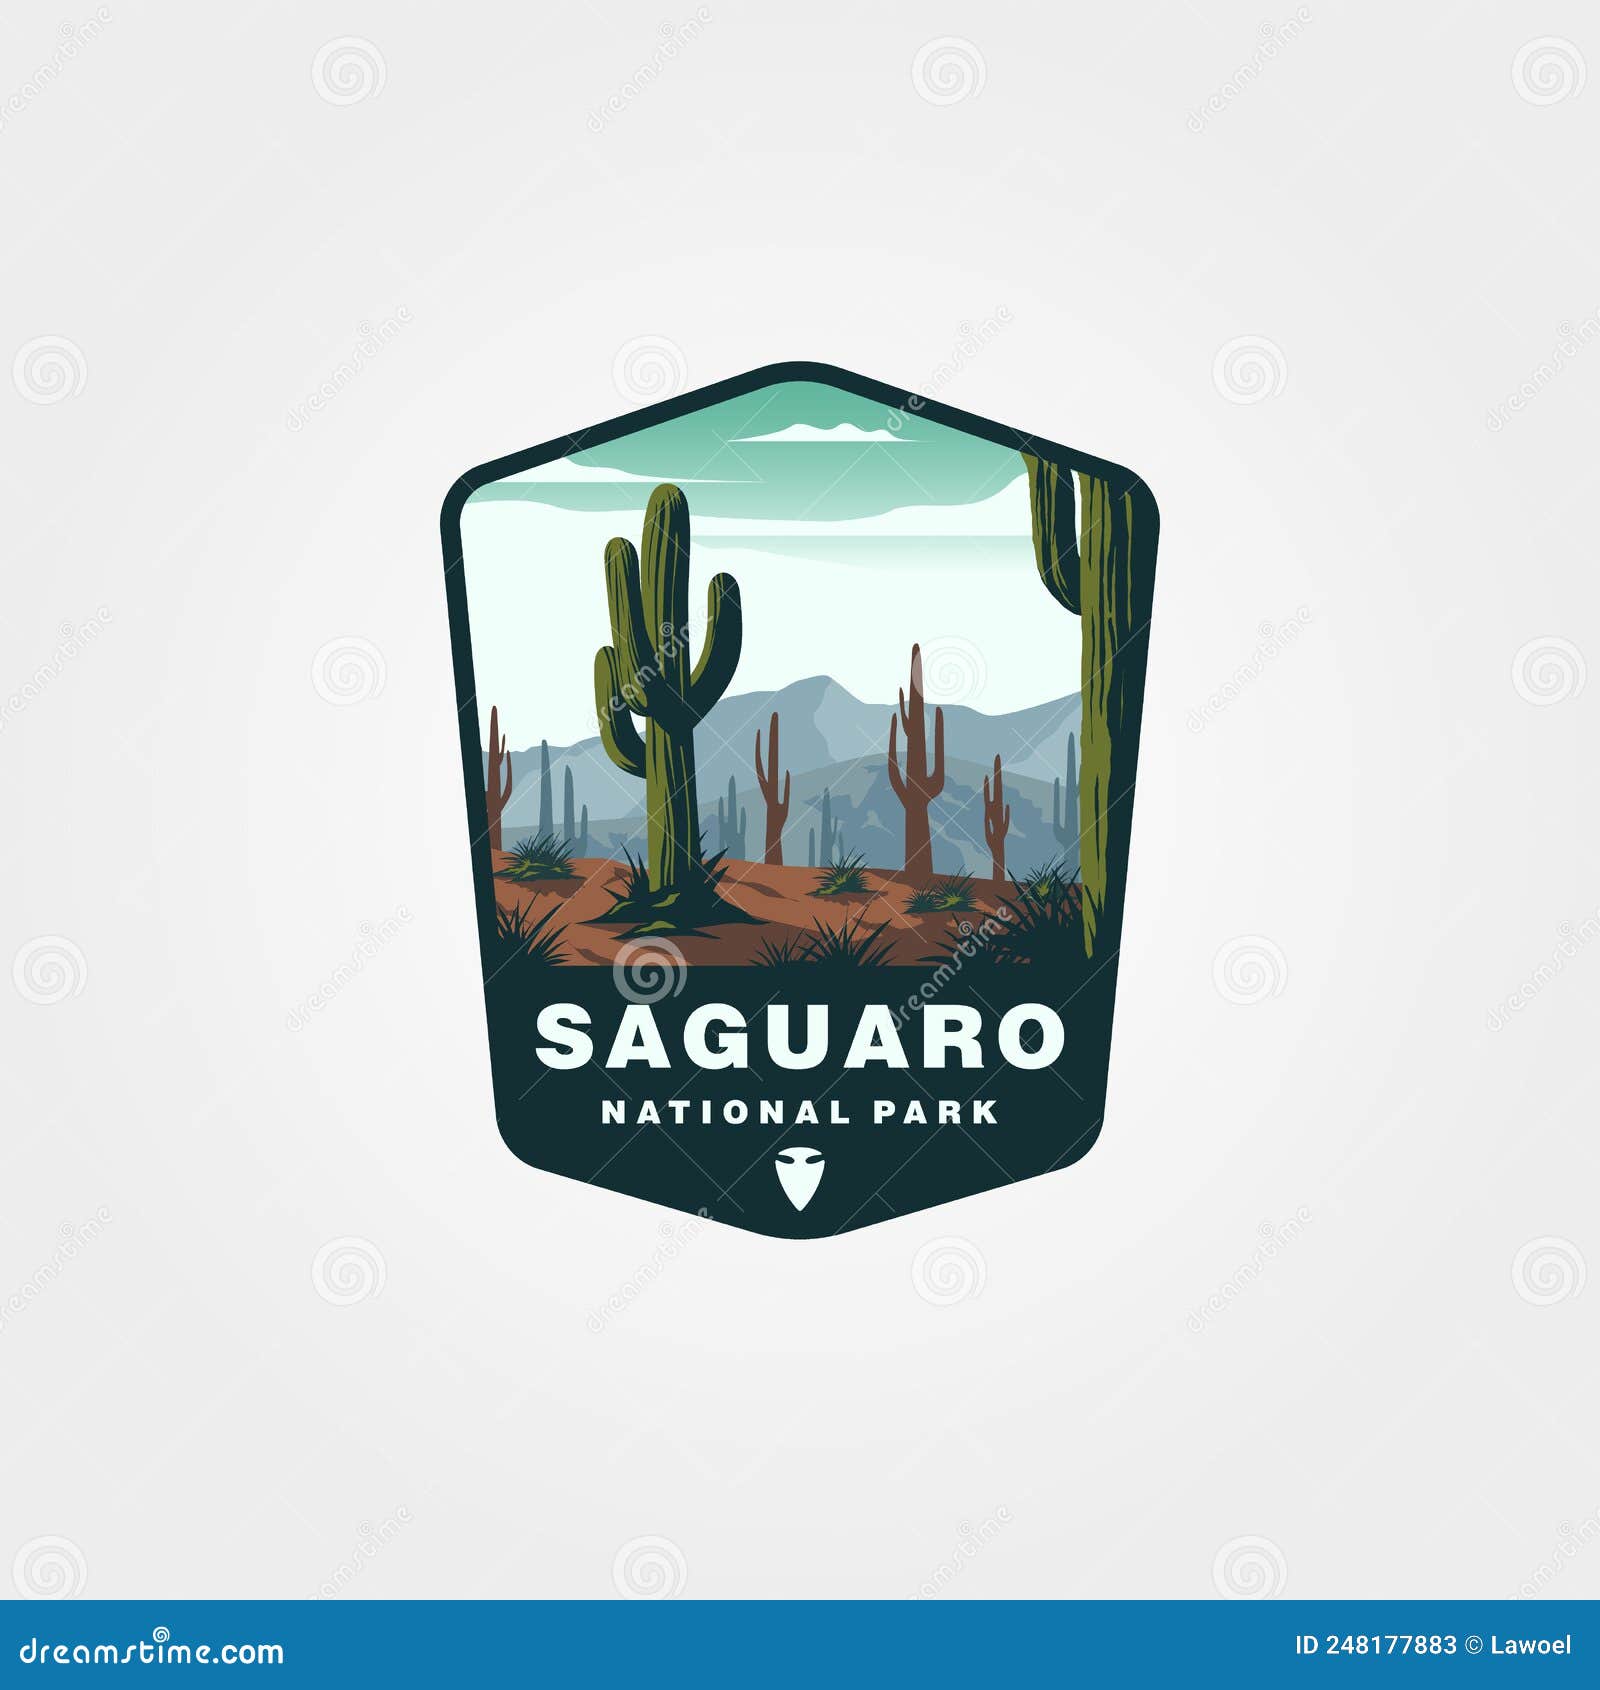  of saguaro national park logo patch    